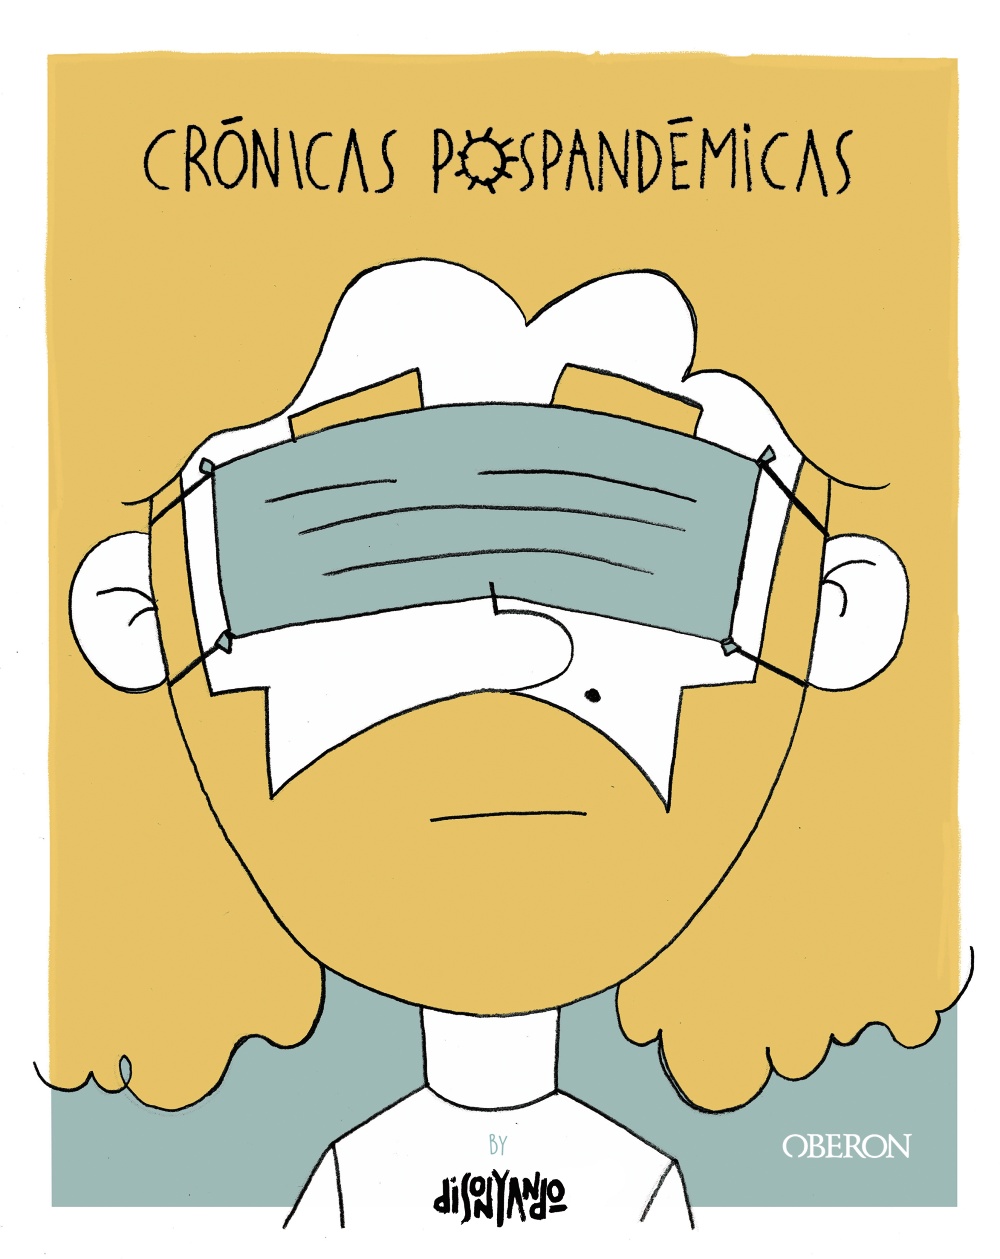 cronicas-pospandemicas-978-84-415-4611-0.jpg